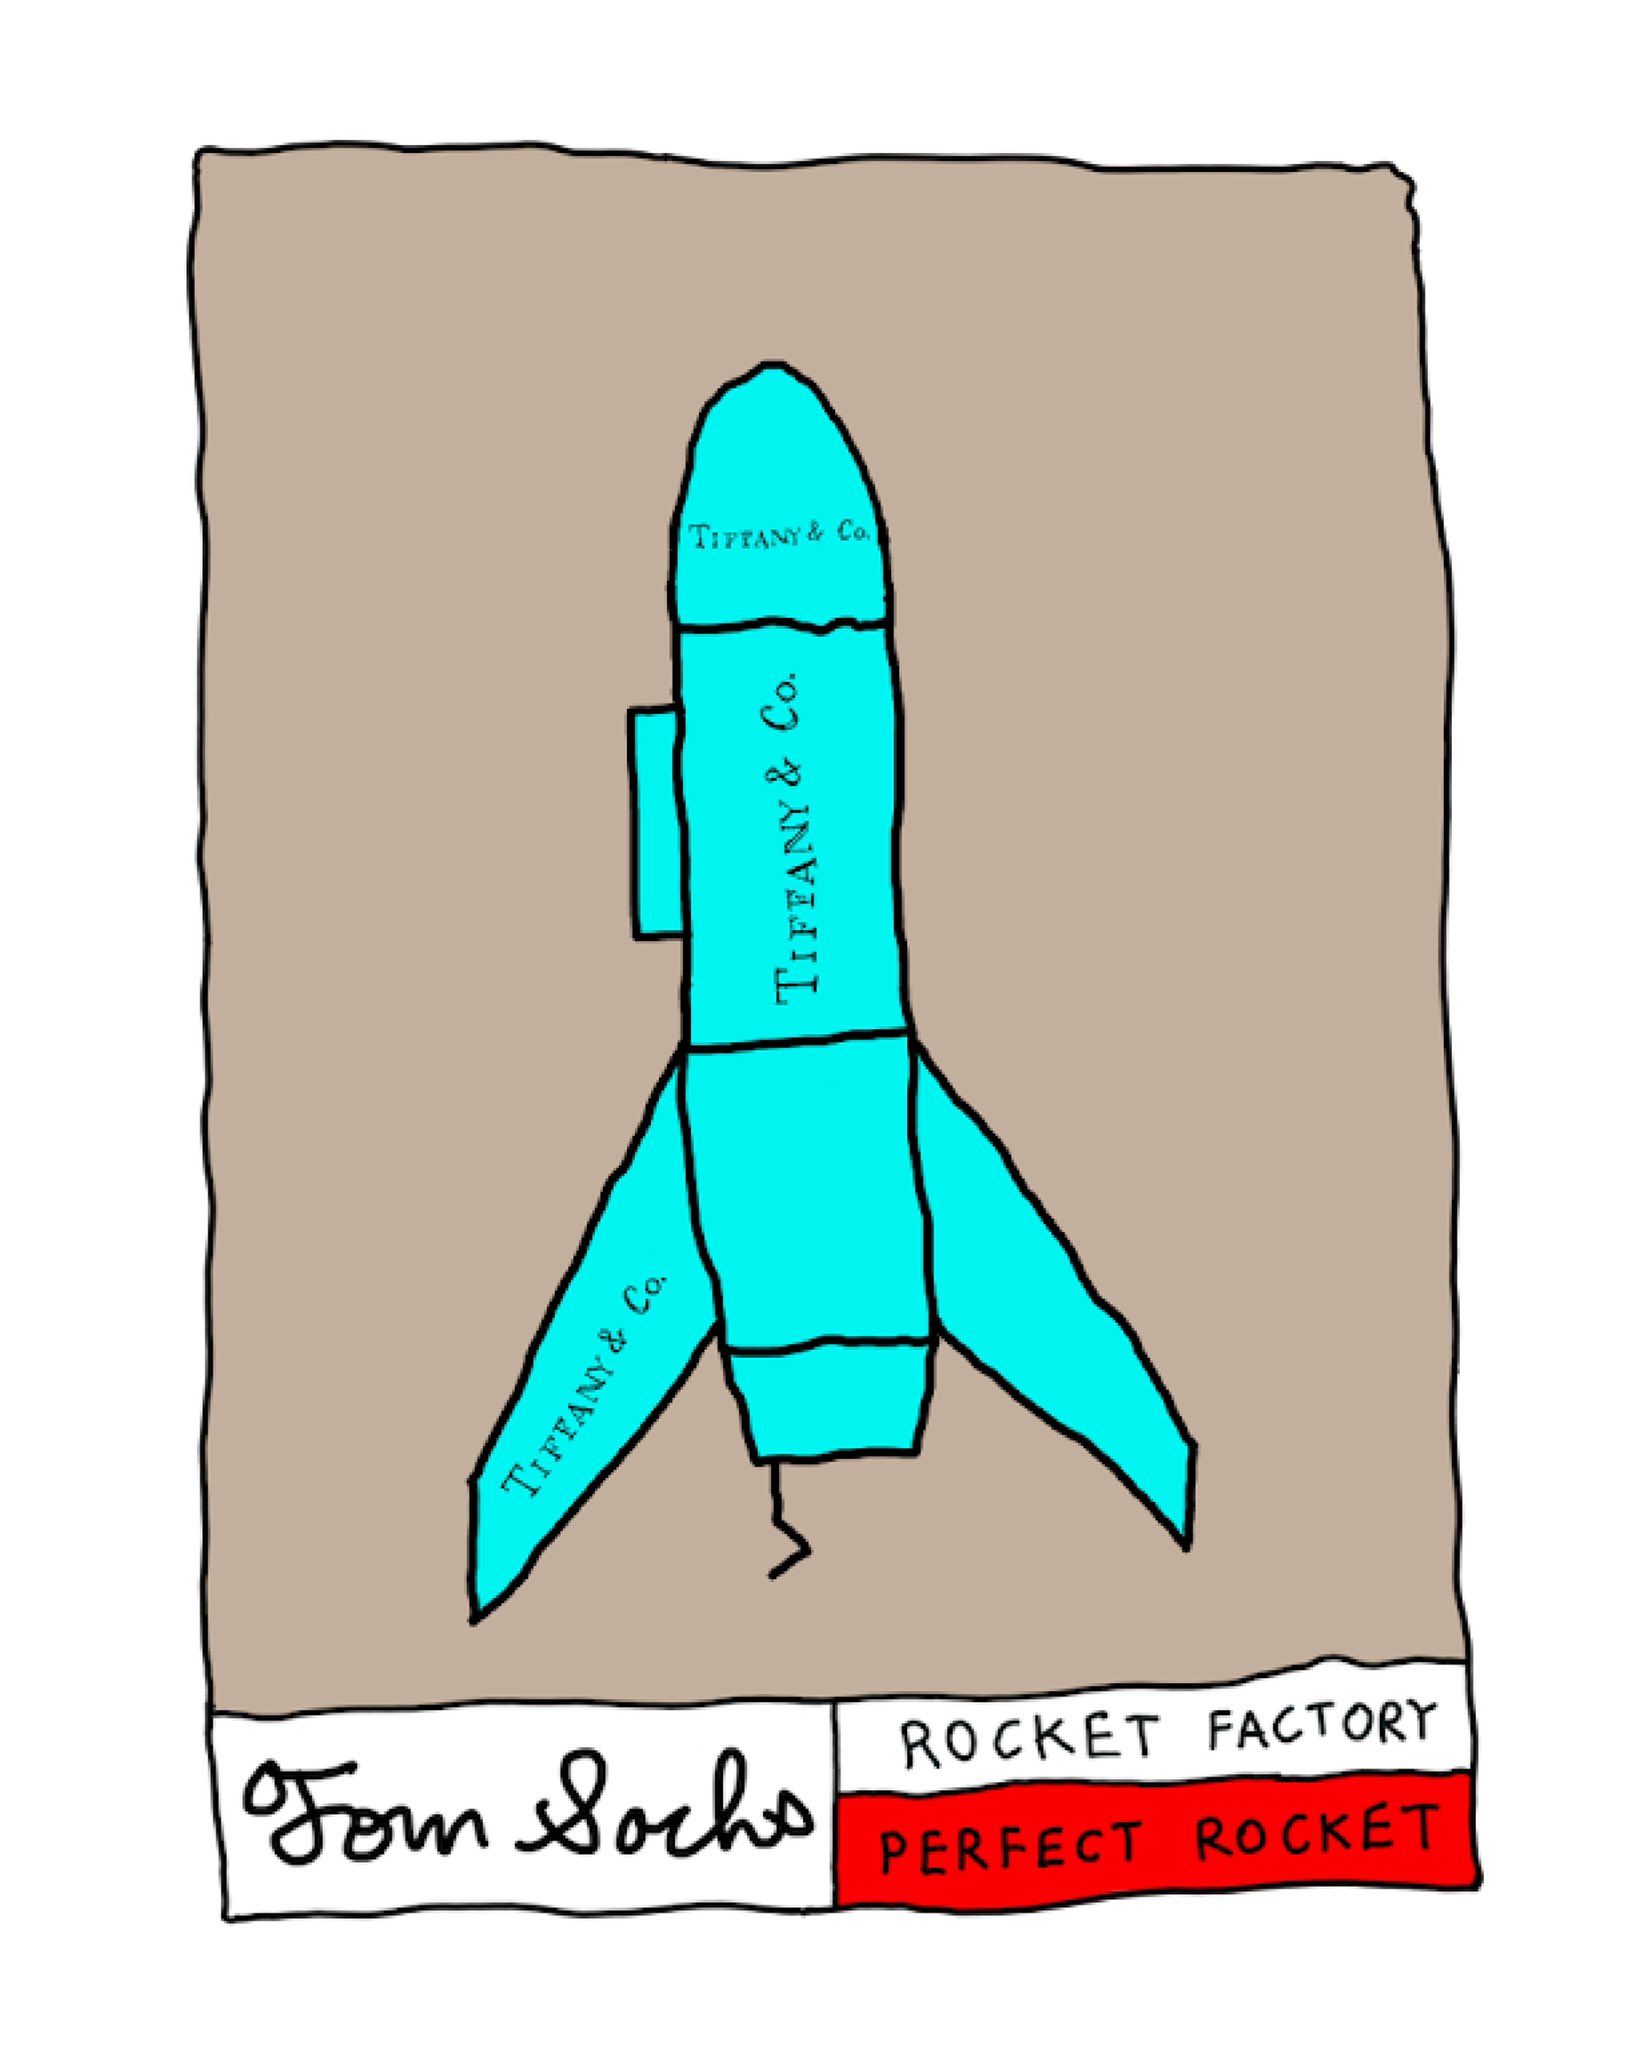 Tiffany 收购美国当代艺术家 Tom Sachs 的“火箭”NFT作品